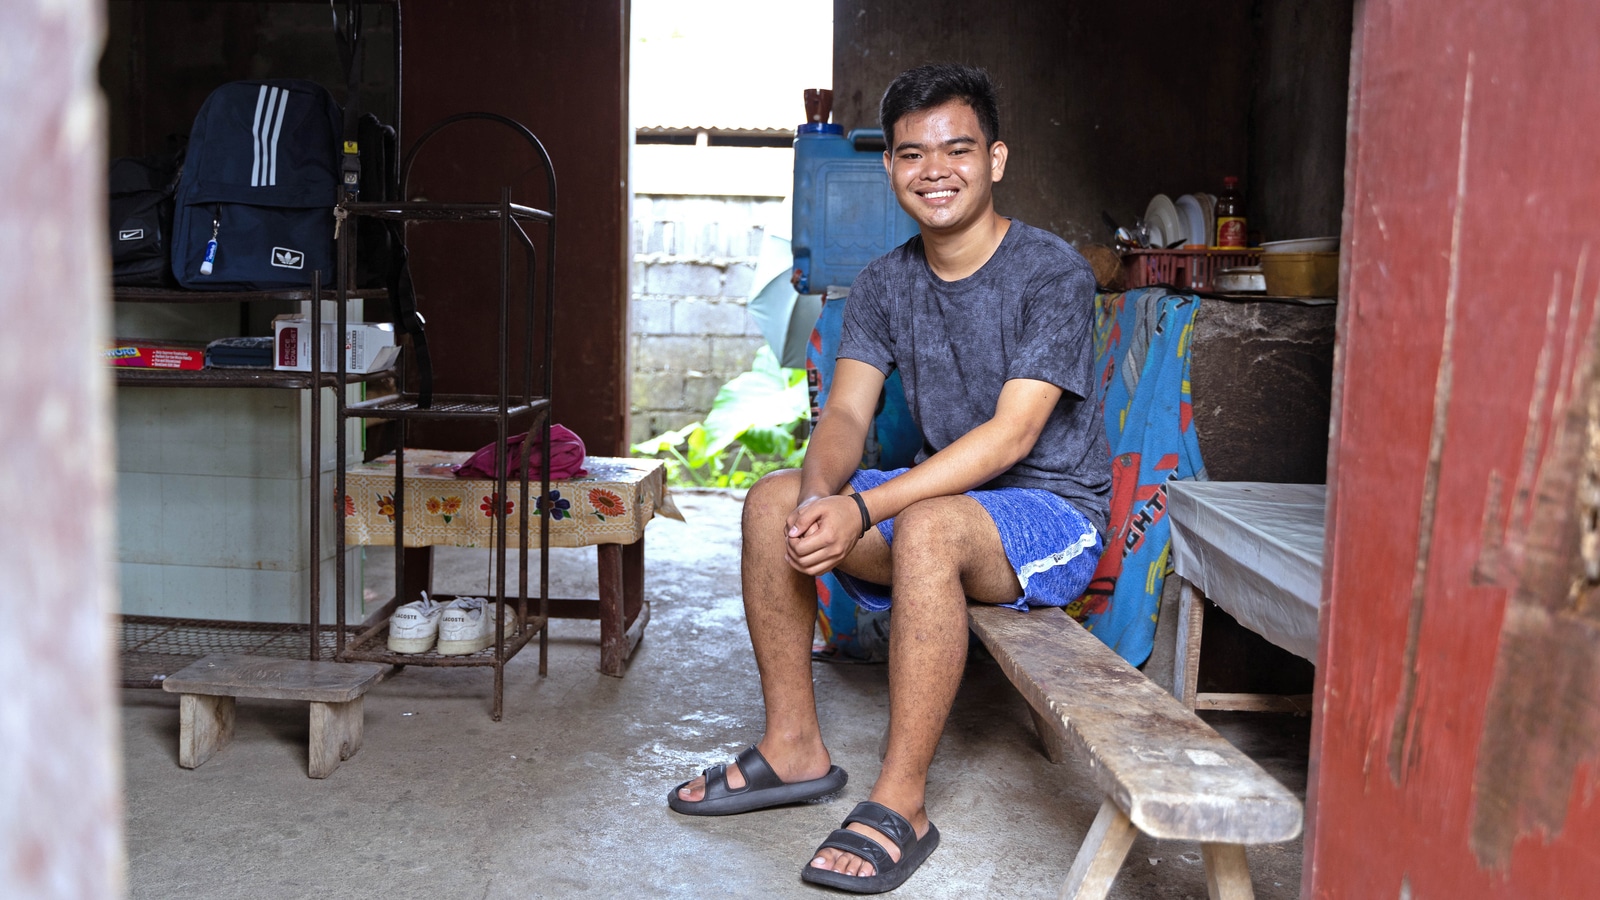 Children International HOPE scholar, Razel, at his home in the Philippines